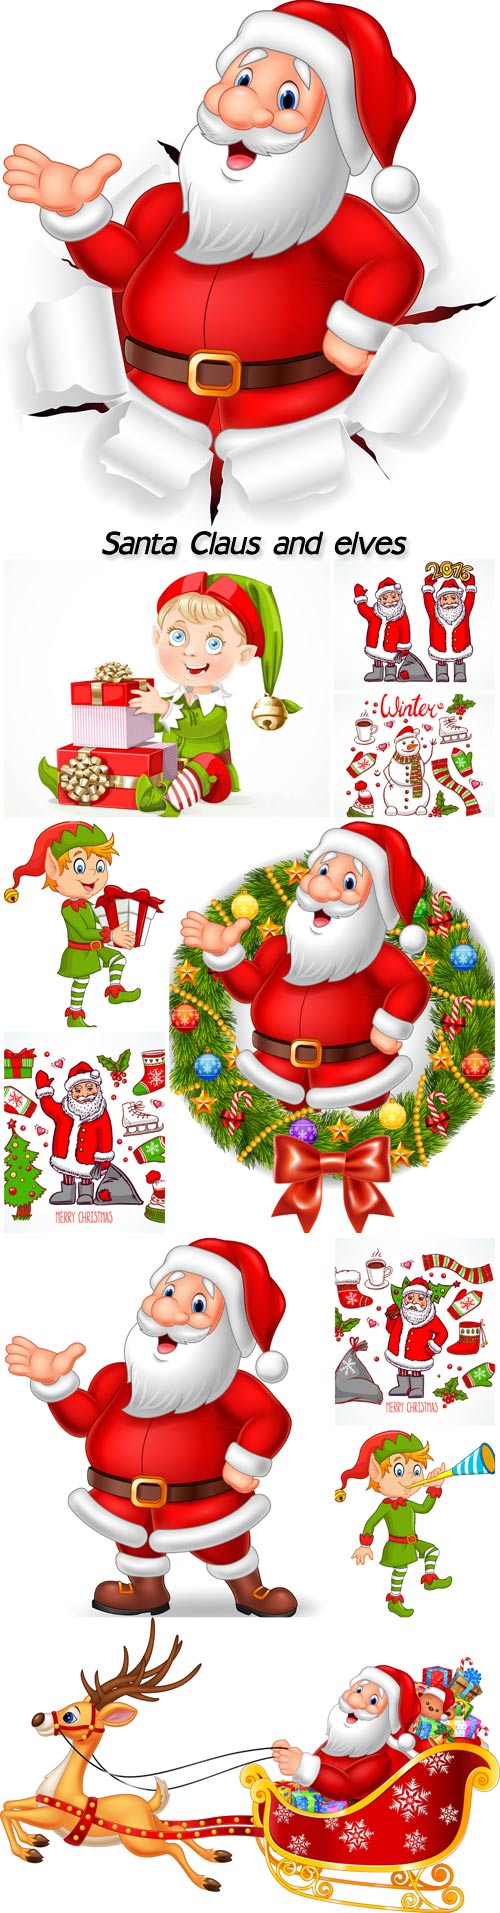 Santa Claus and elves, Christmas vector